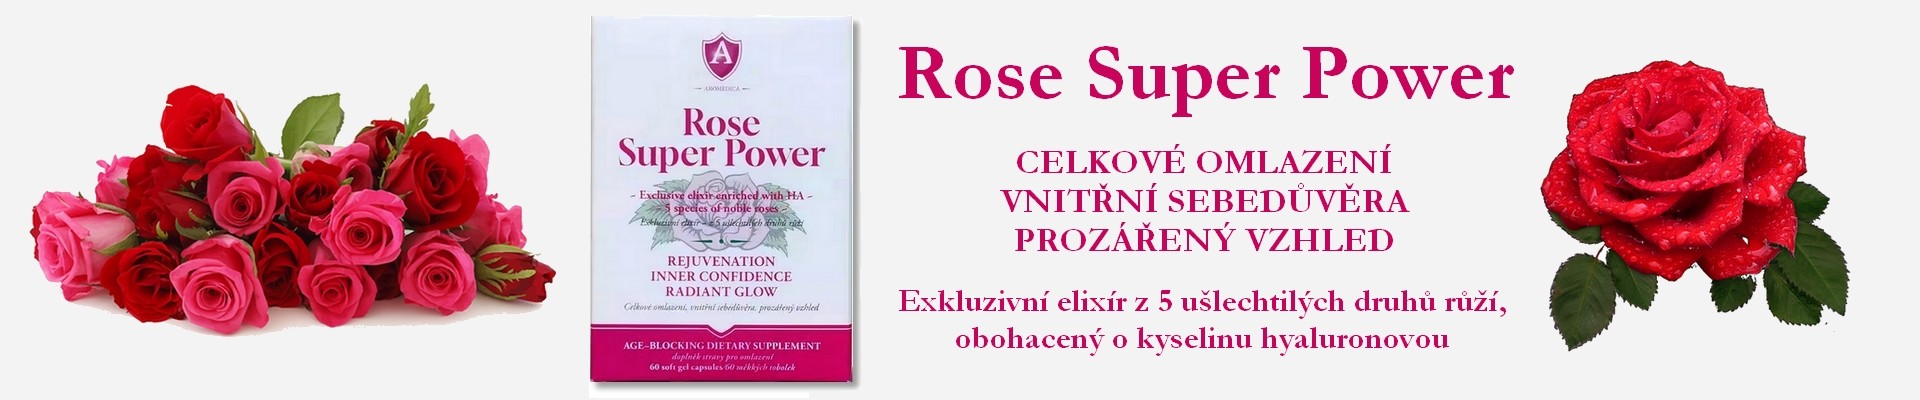 ROSE SUPER POWER1